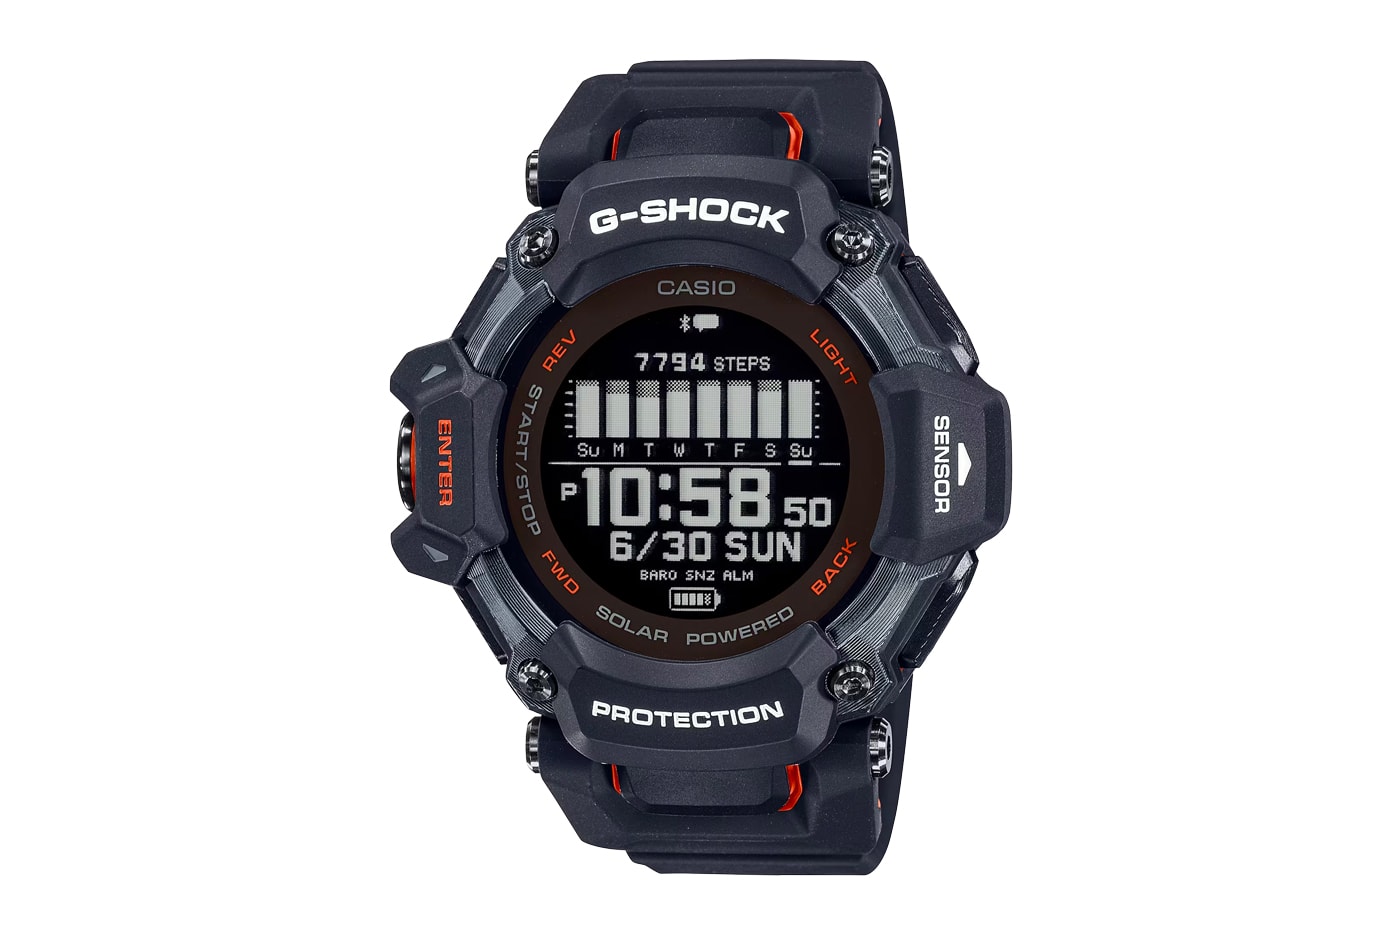 G-SHOCK G-SQUAD GBD-H2000 Watch Release Info